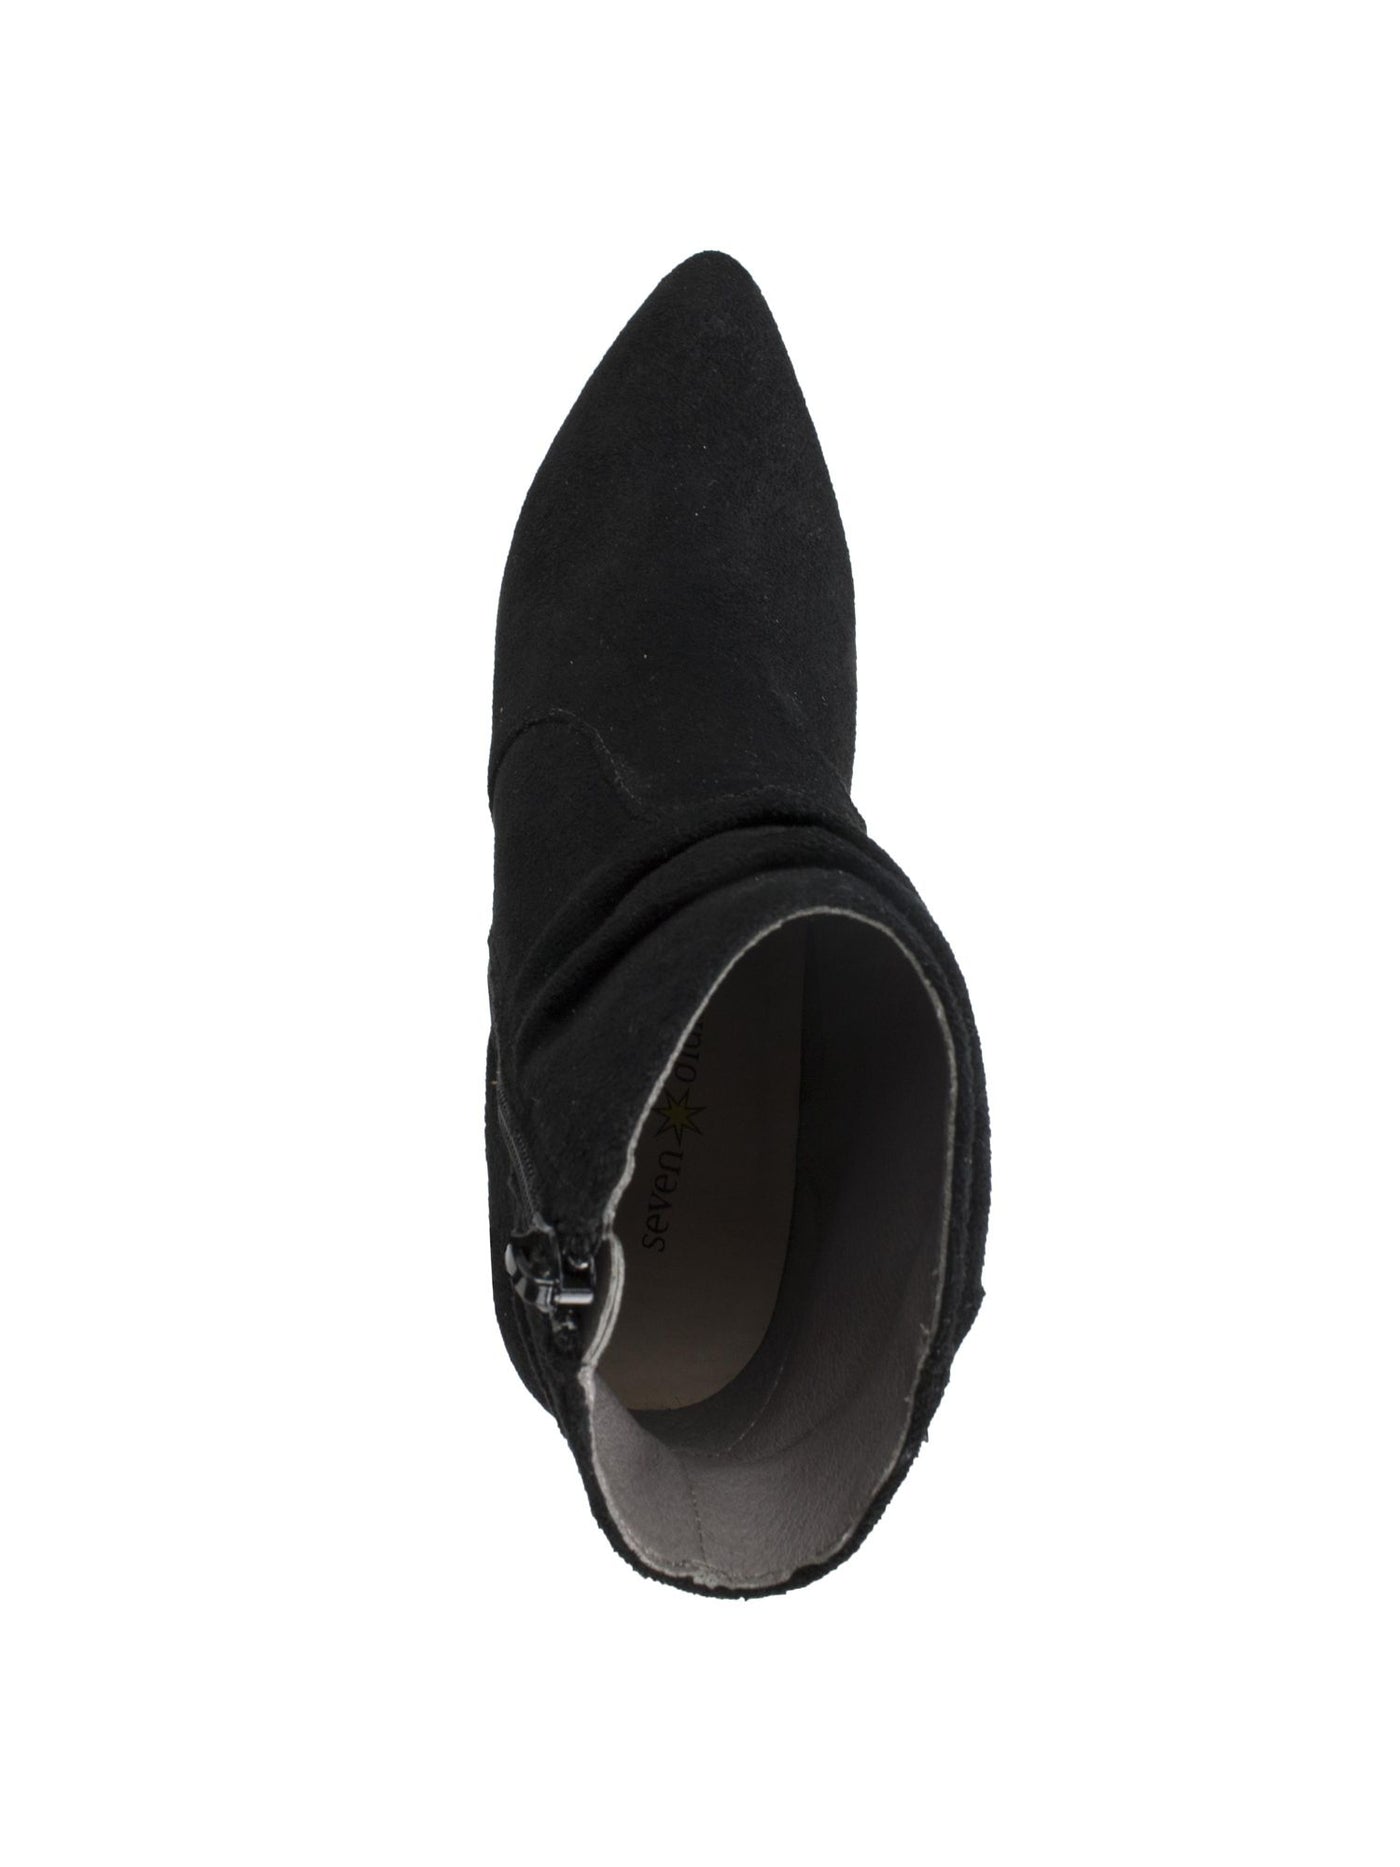 SEVEN DIALS Womens Black Comfort Padded Ruched Halsey Pointed Toe Block Heel Zip-Up Booties 10 M